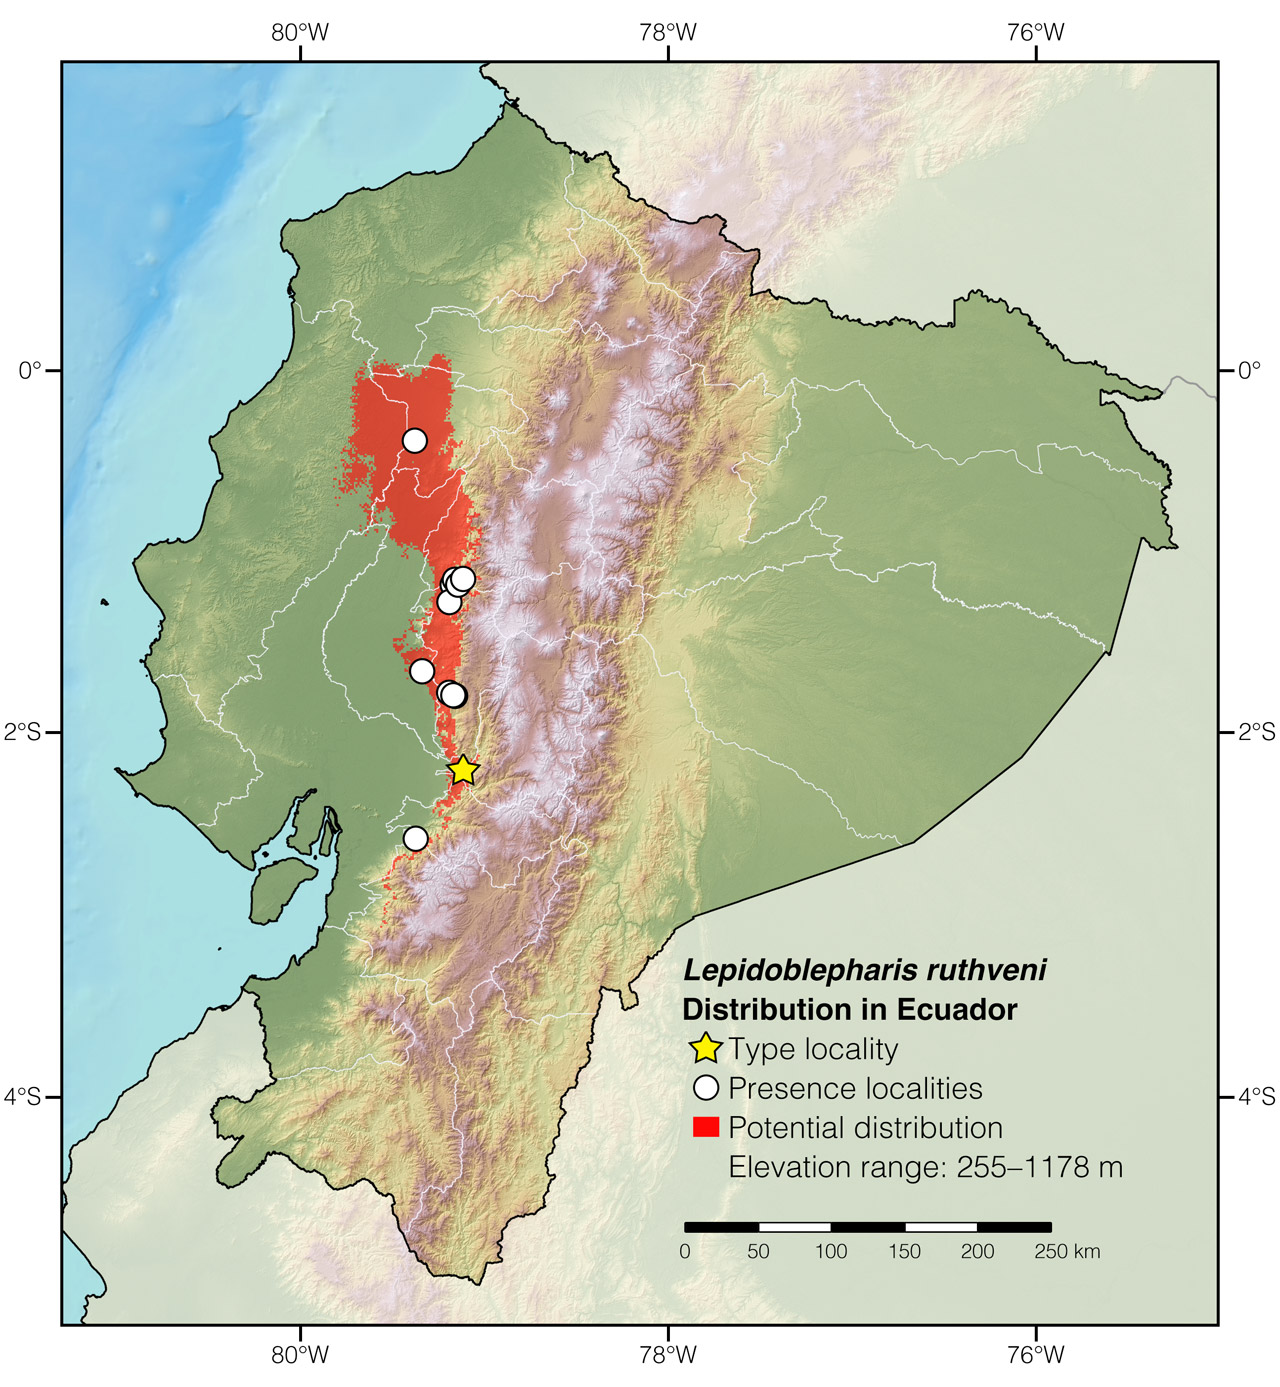 Distribution of Lepidoblepharis ruthveni in Ecuador